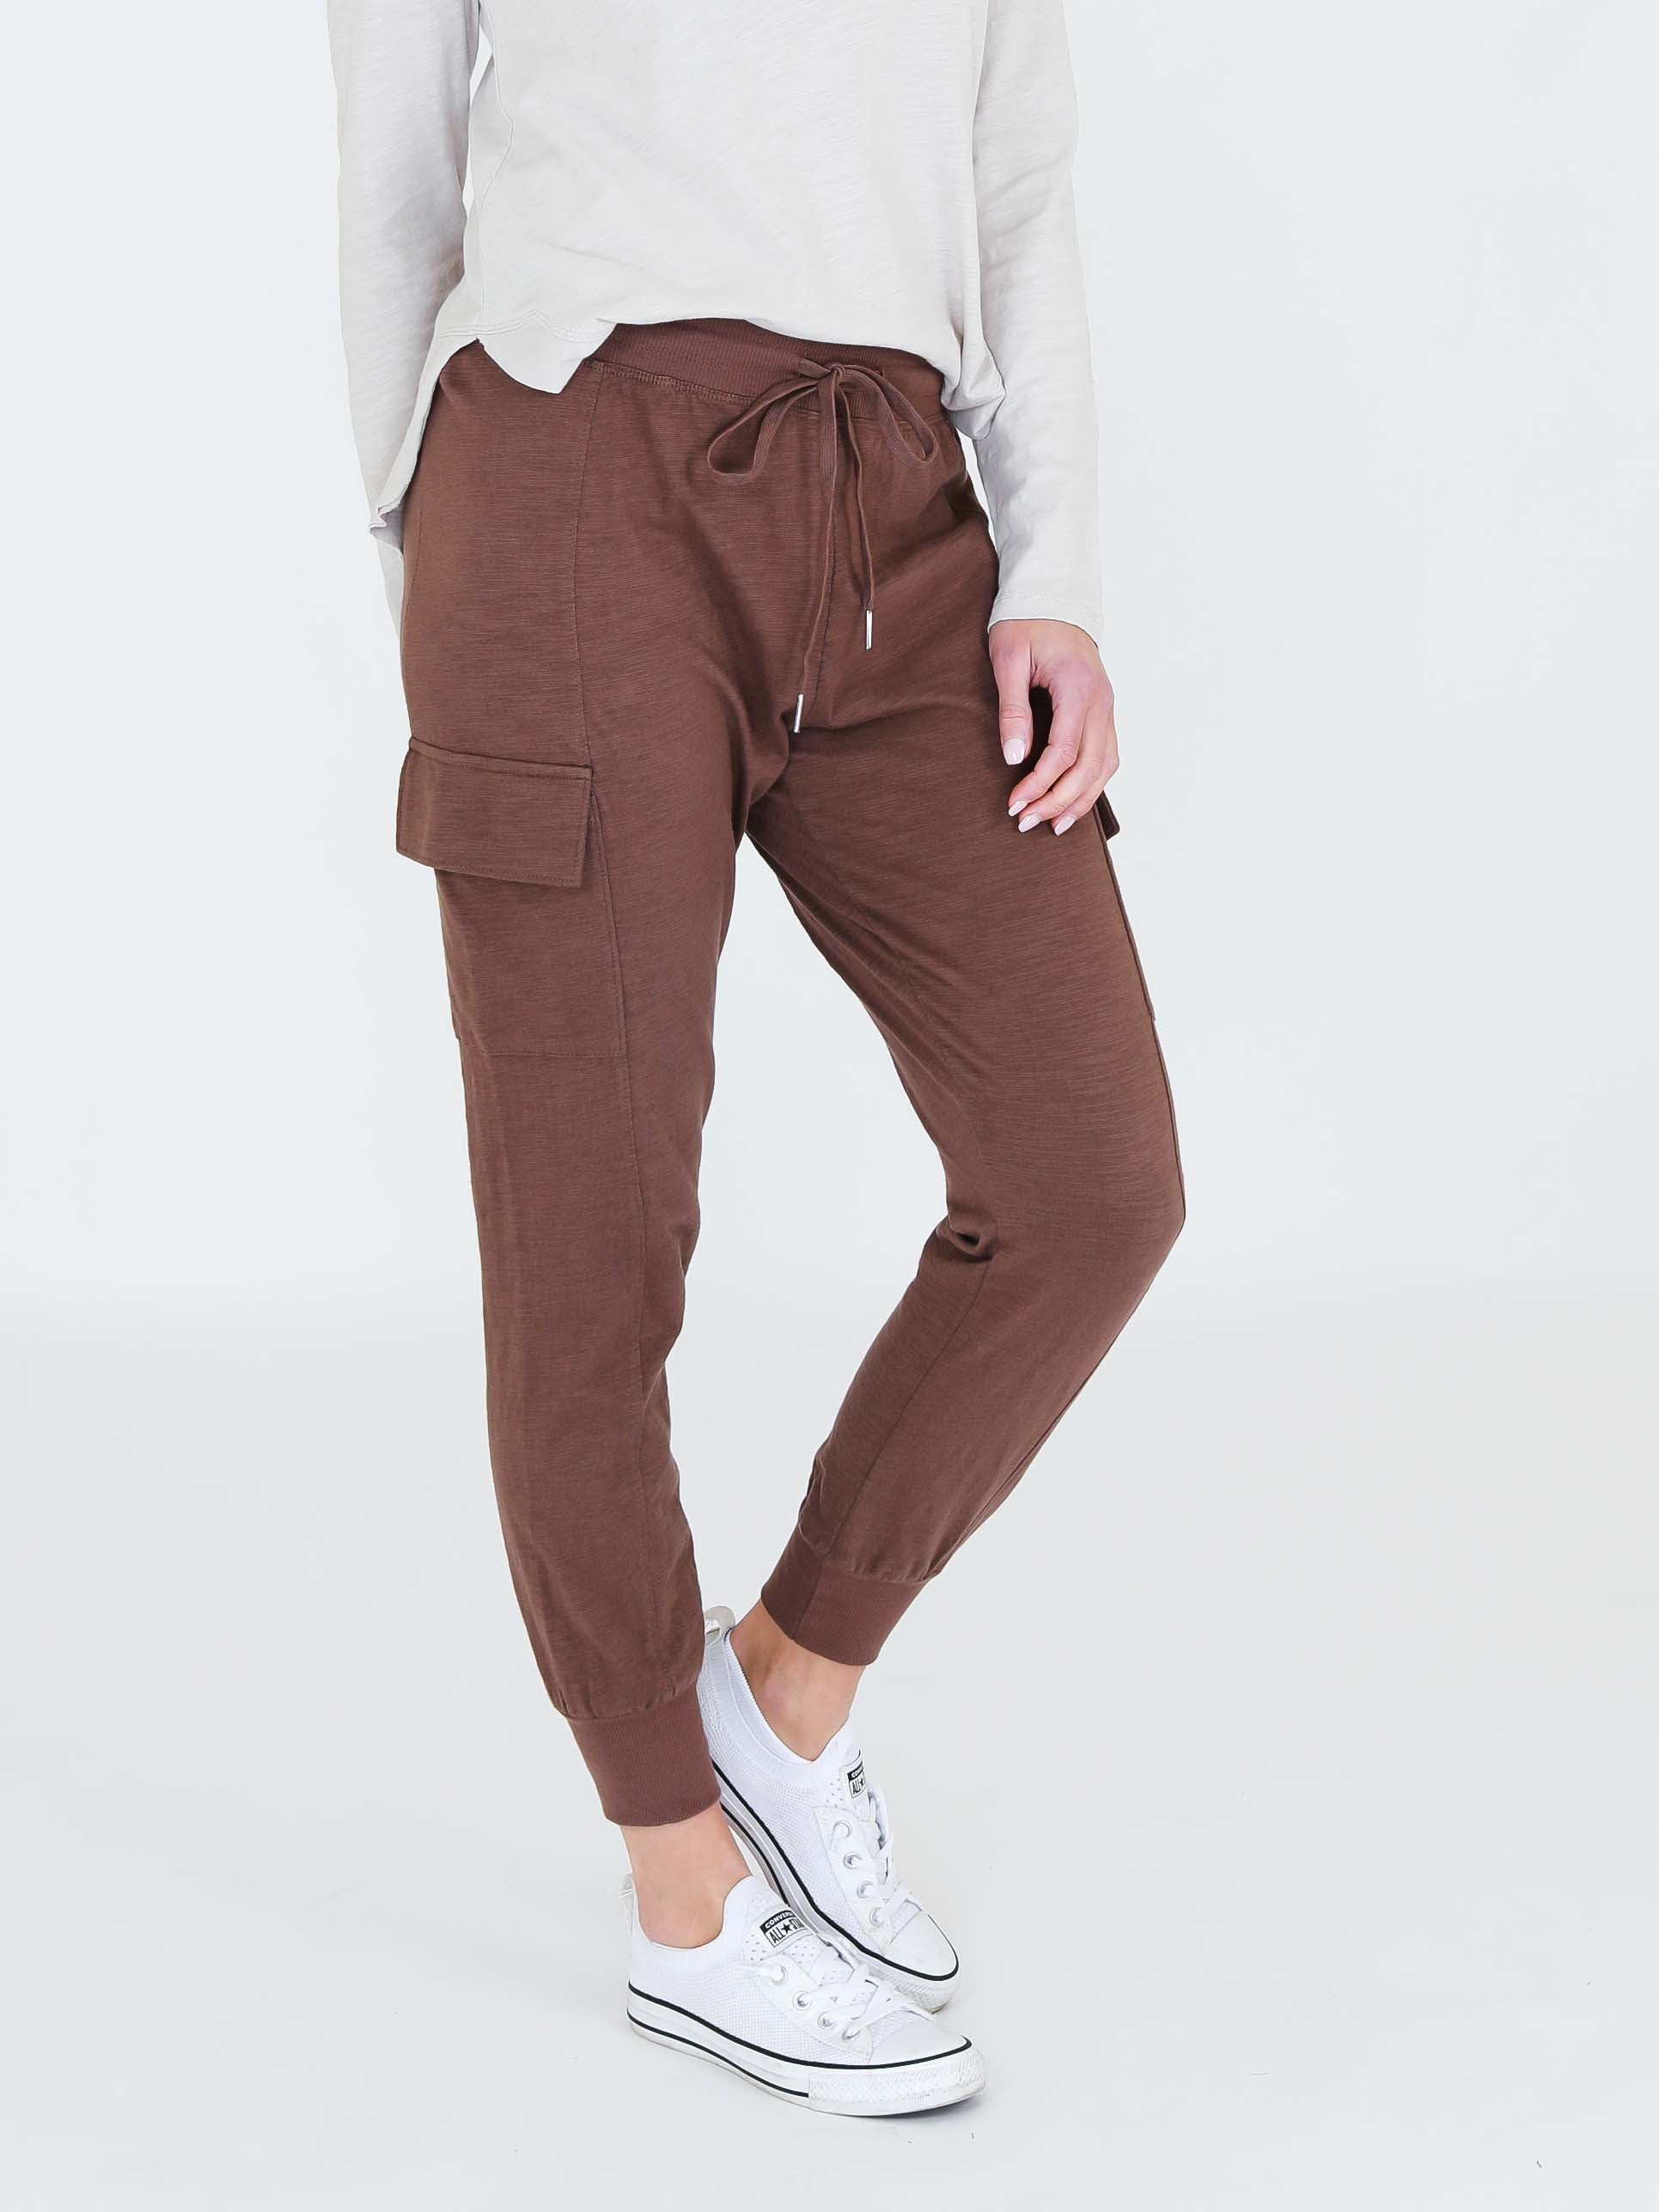 brown cargo pants women #color_hot chocolate